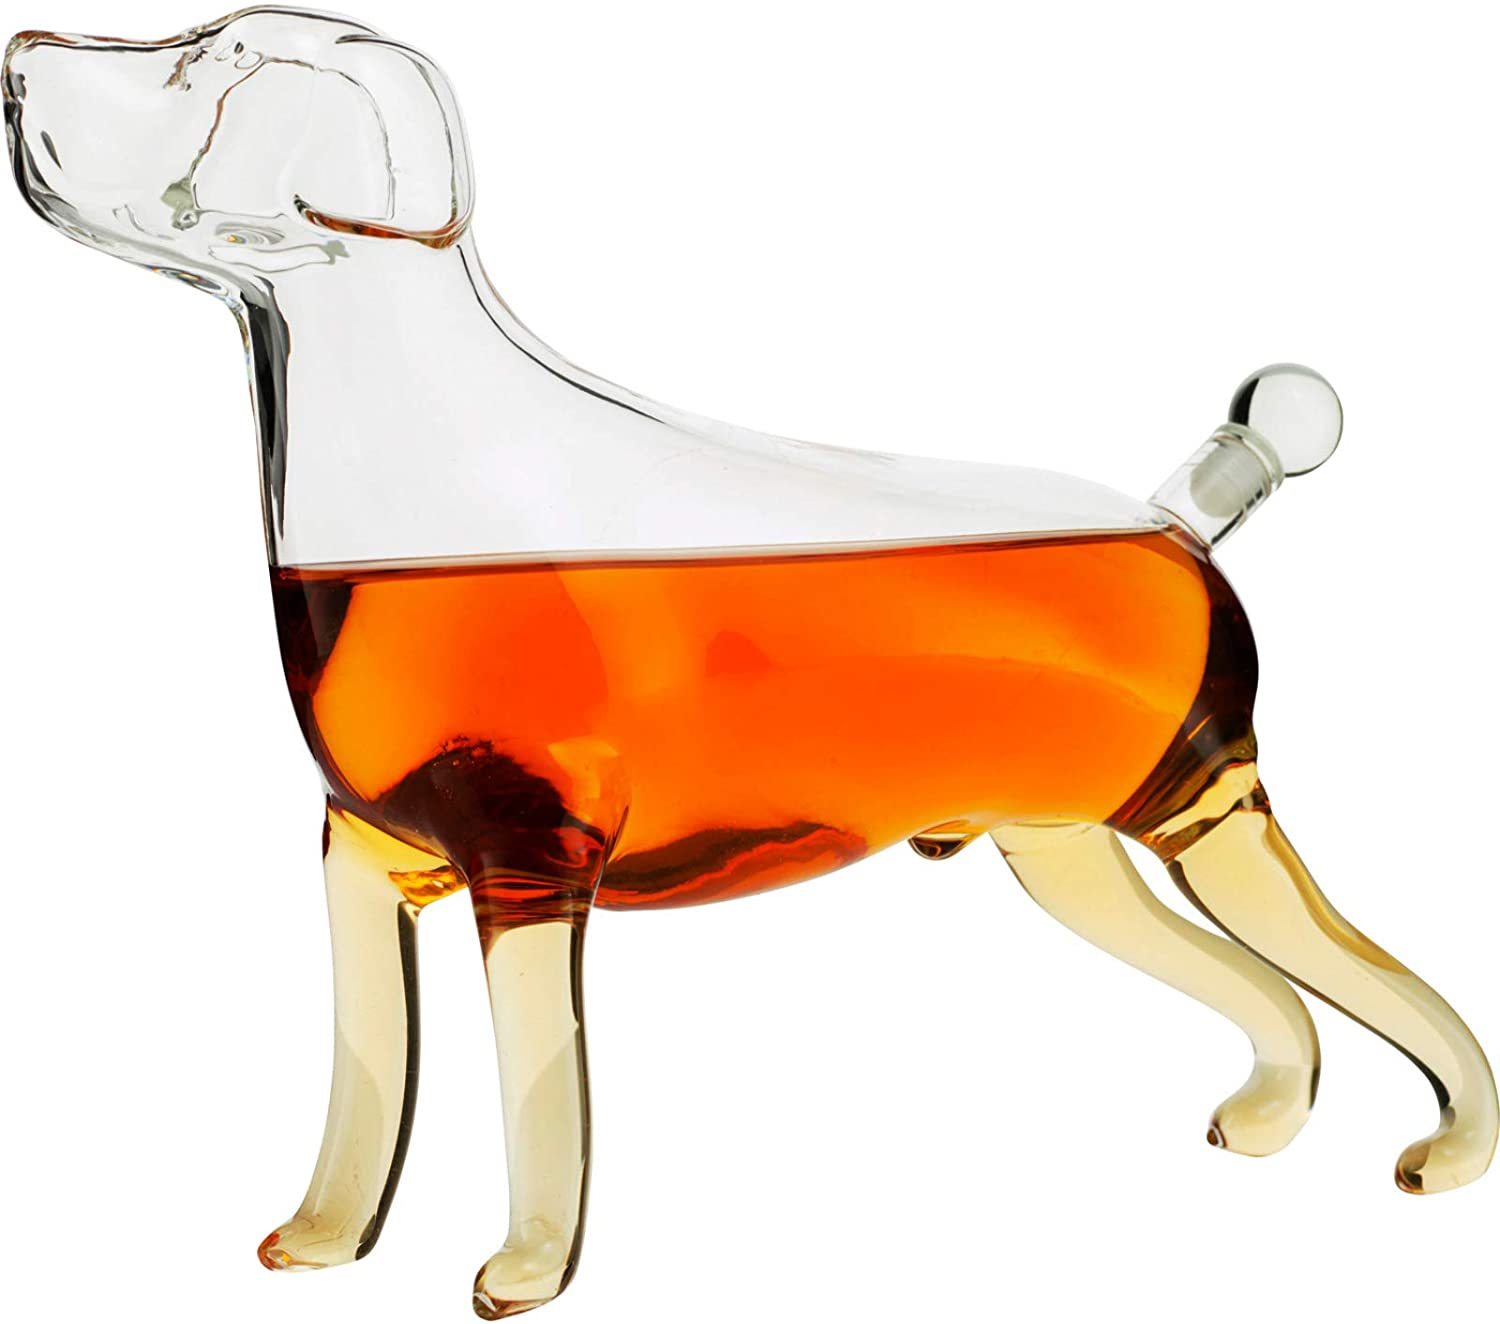 A Labrador dog shaped whiskey decanter